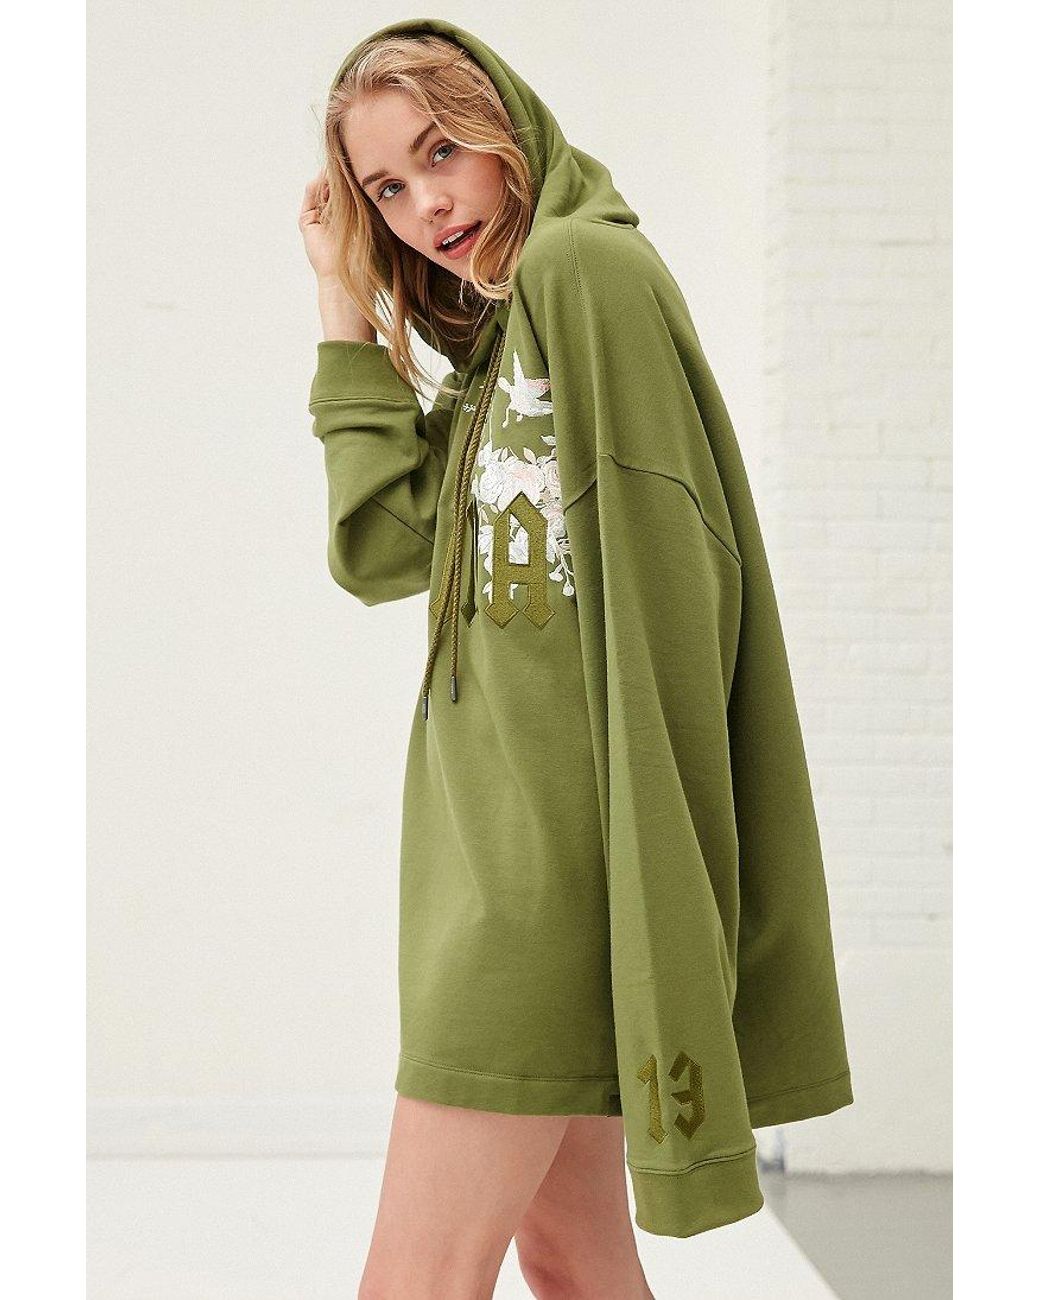 PUMA Fenty By Rihanna Oversized Hoodie Sweatshirt in Green | Lyst